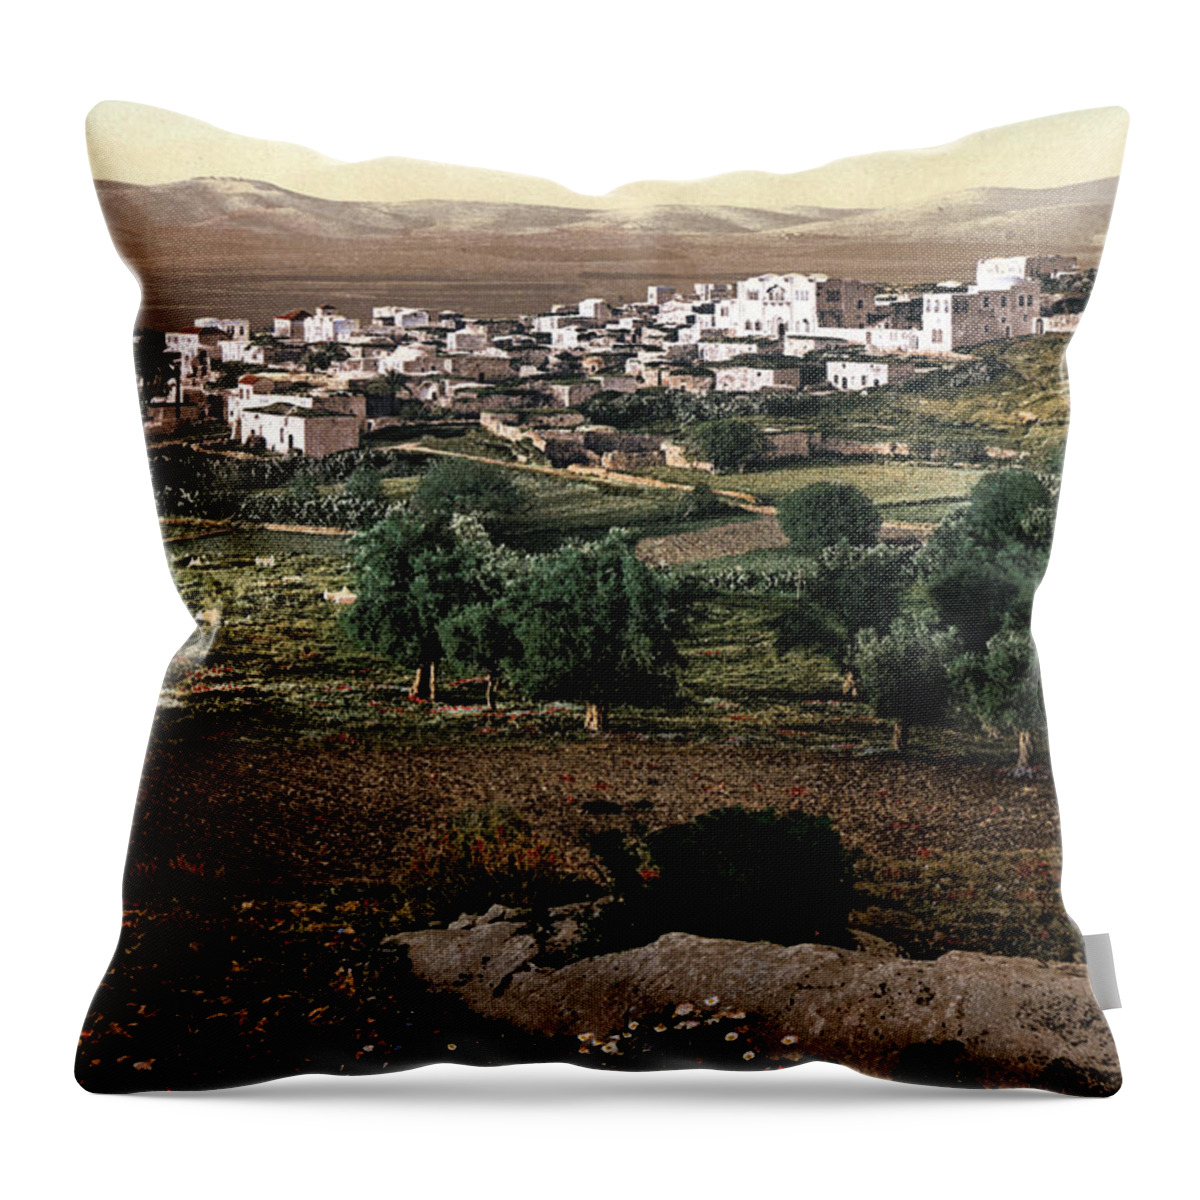 Jenin Throw Pillow featuring the photograph Holy Land - Jenin by Munir Alawi